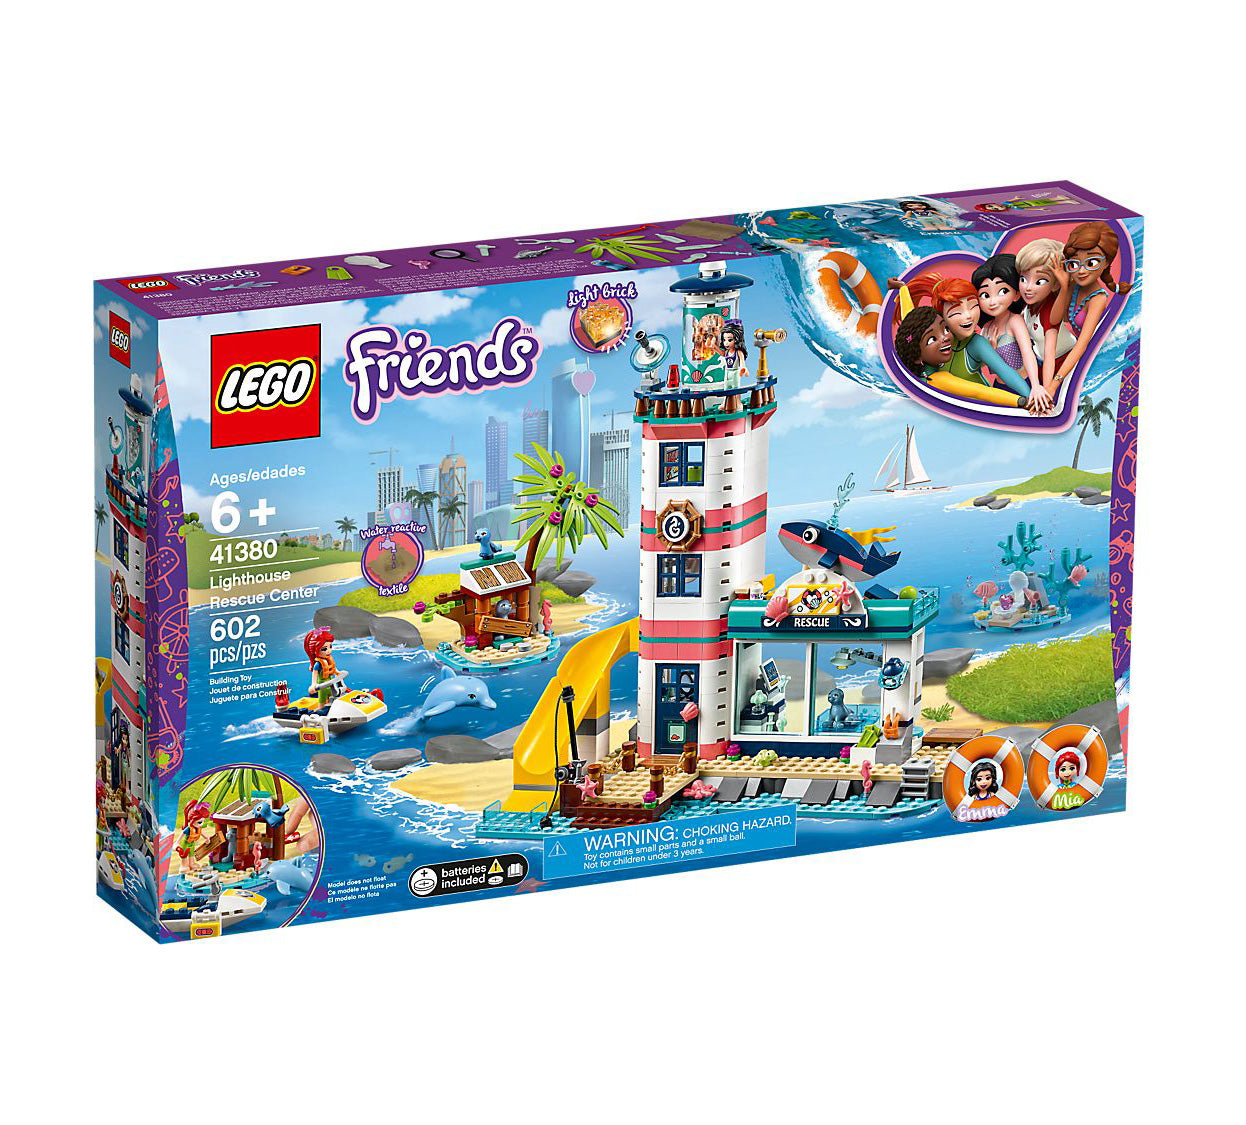 Lego Friends Lighthouse Rescue Center 41380